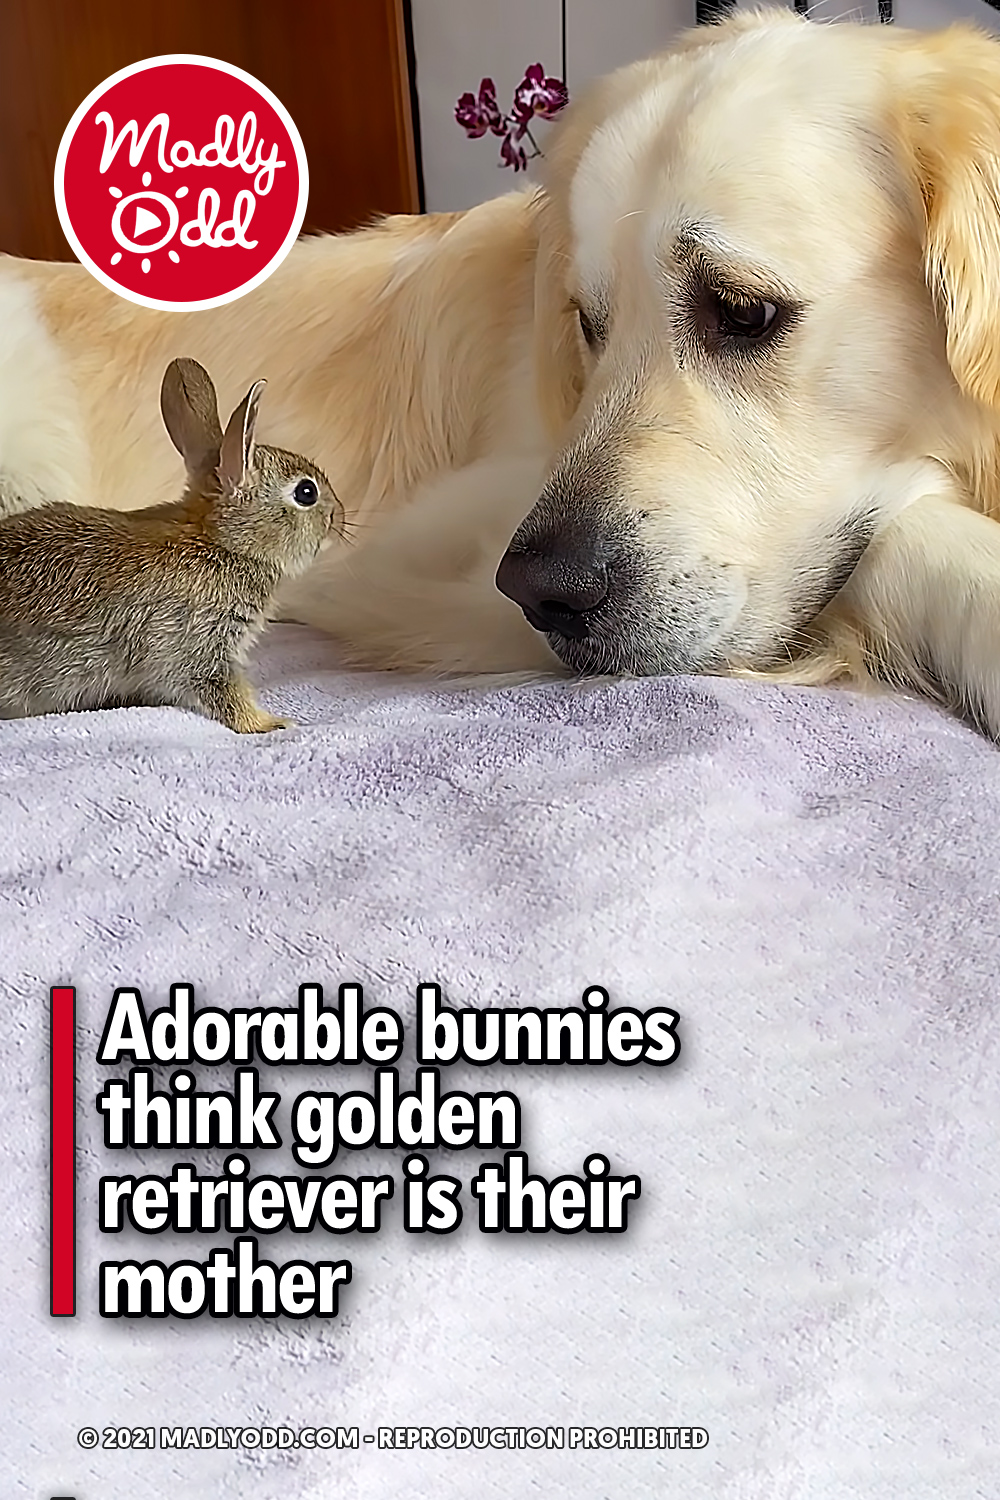 Adorable bunnies think golden retriever is their mother